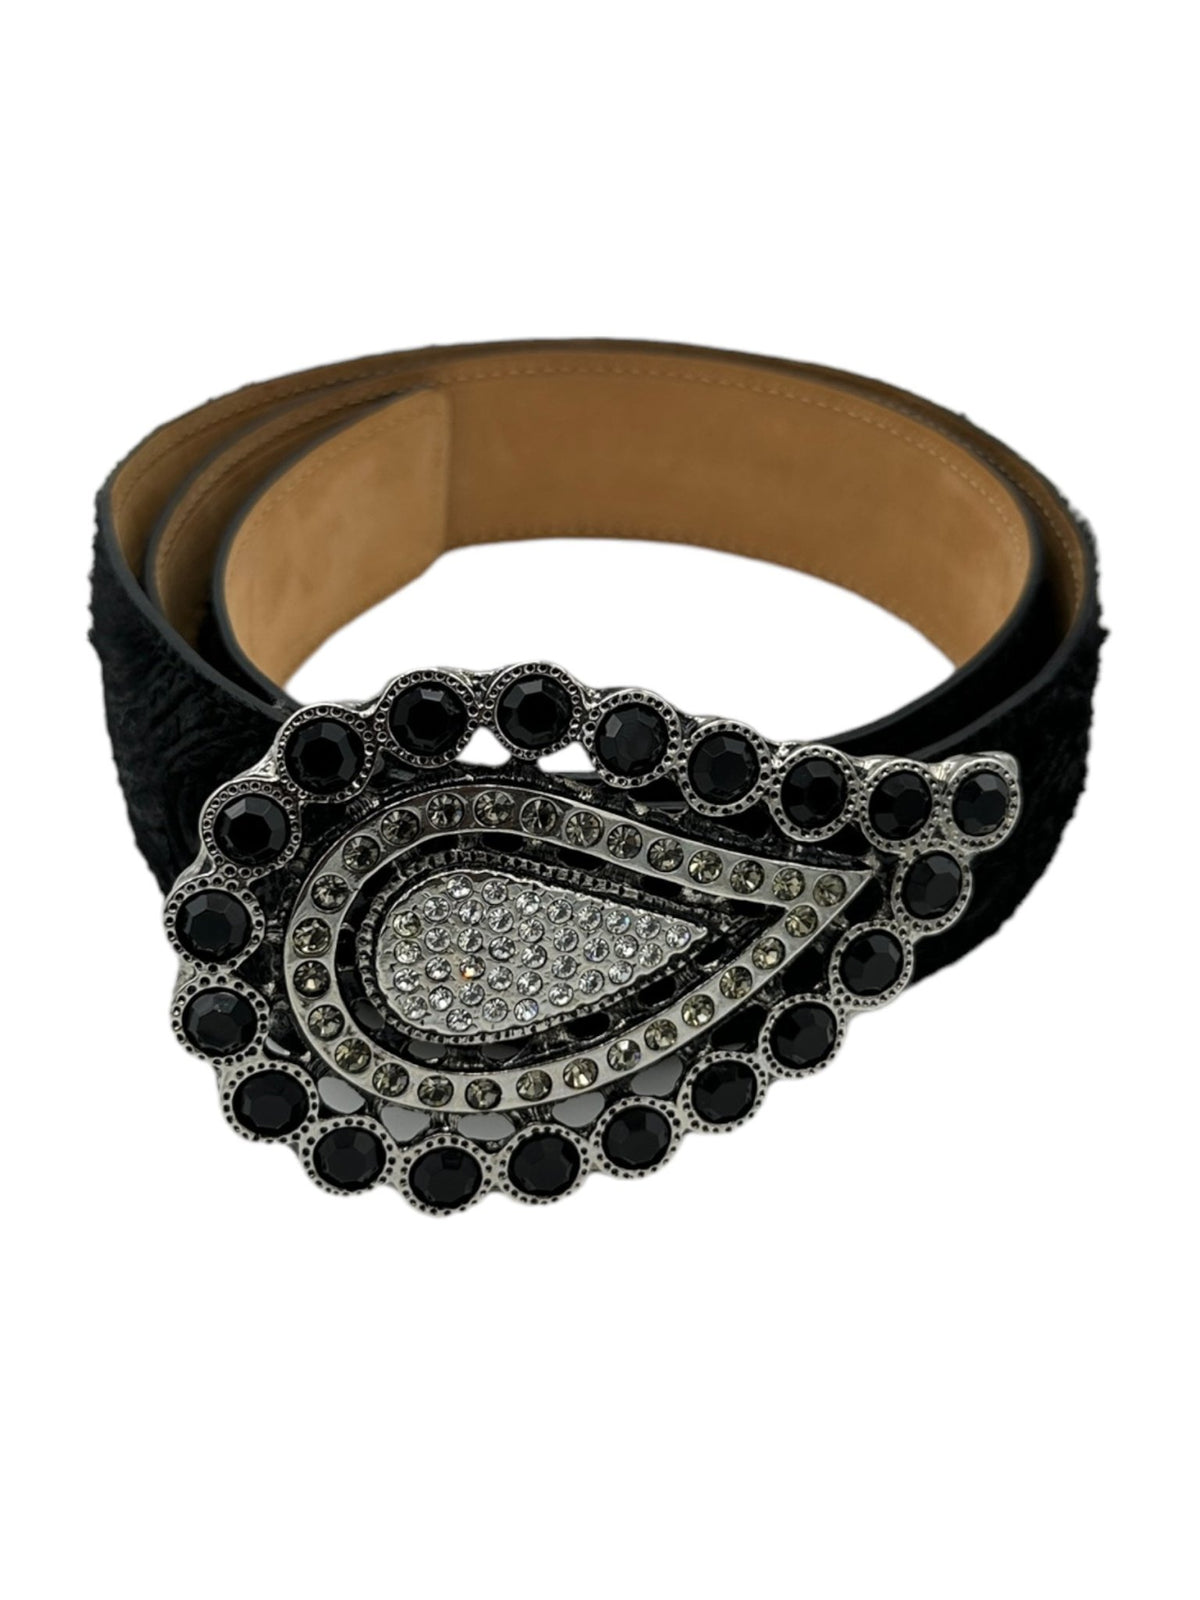 ETRO Large Pasley Black Rhinestone Embossed Leather Statement Belt Italy - 24 Wishes Vintage Jewelry